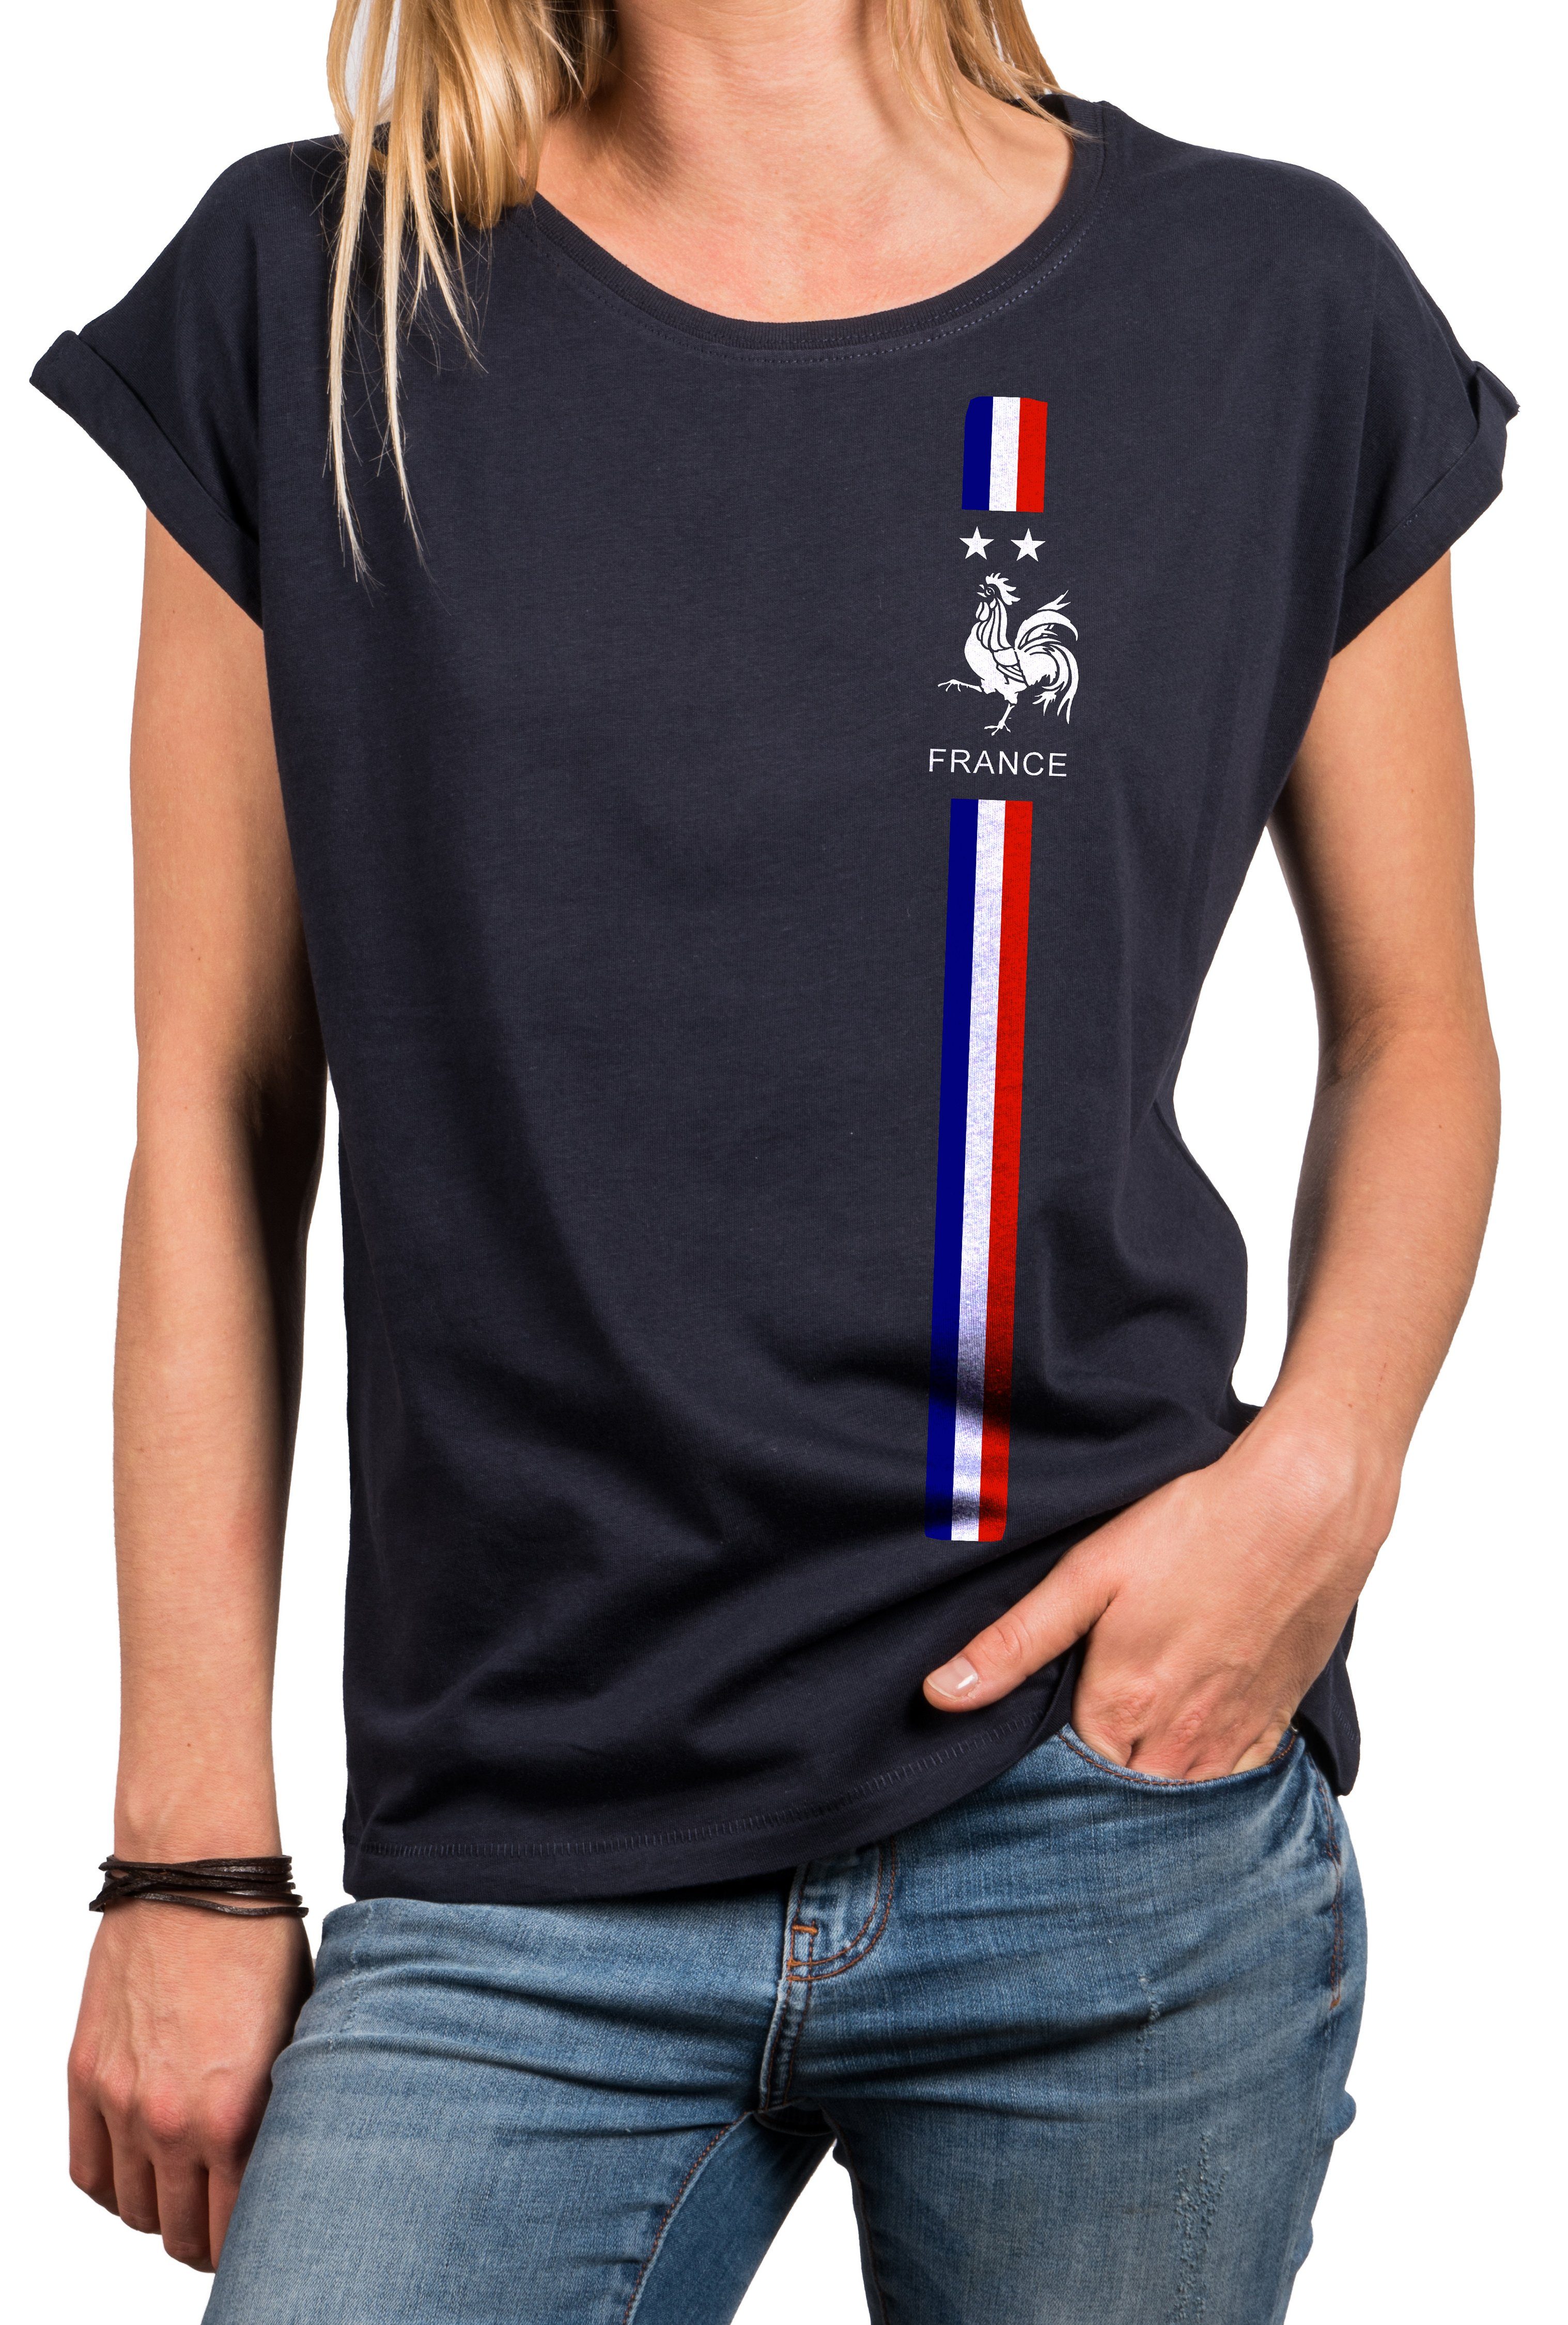 MAKAYA Print-Shirt Damen Kurzarmshirt Baumwolle Frankreich Fahne Flagge Trikot Top Tunika, große Größen